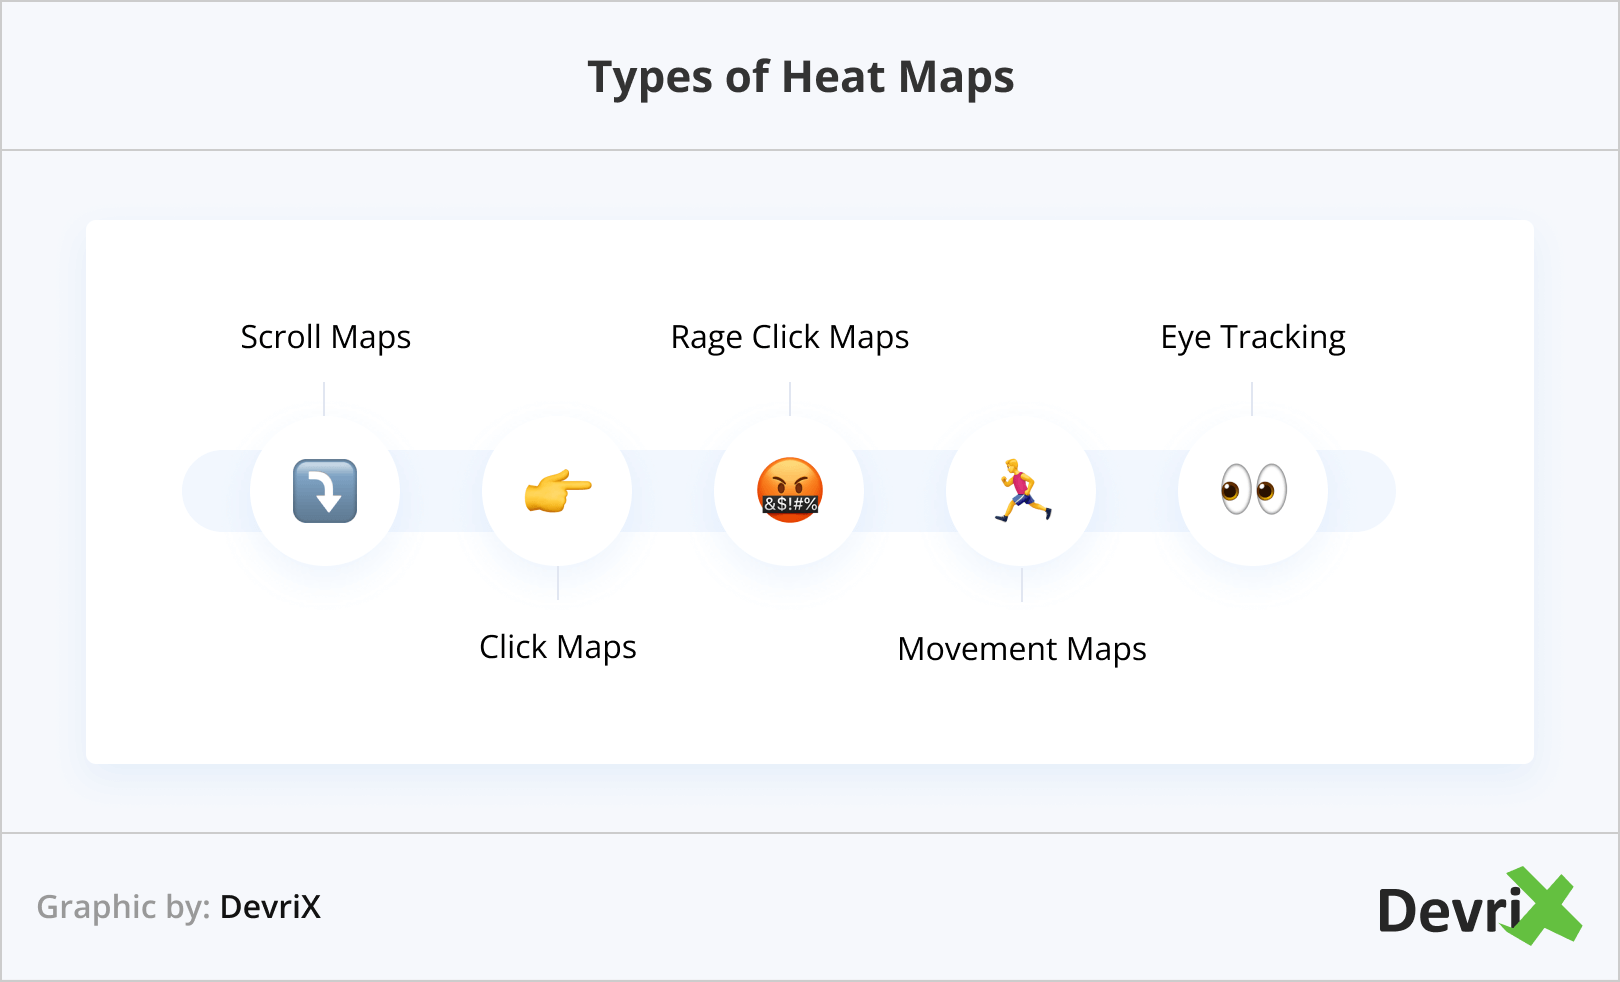 Types of Heat Maps